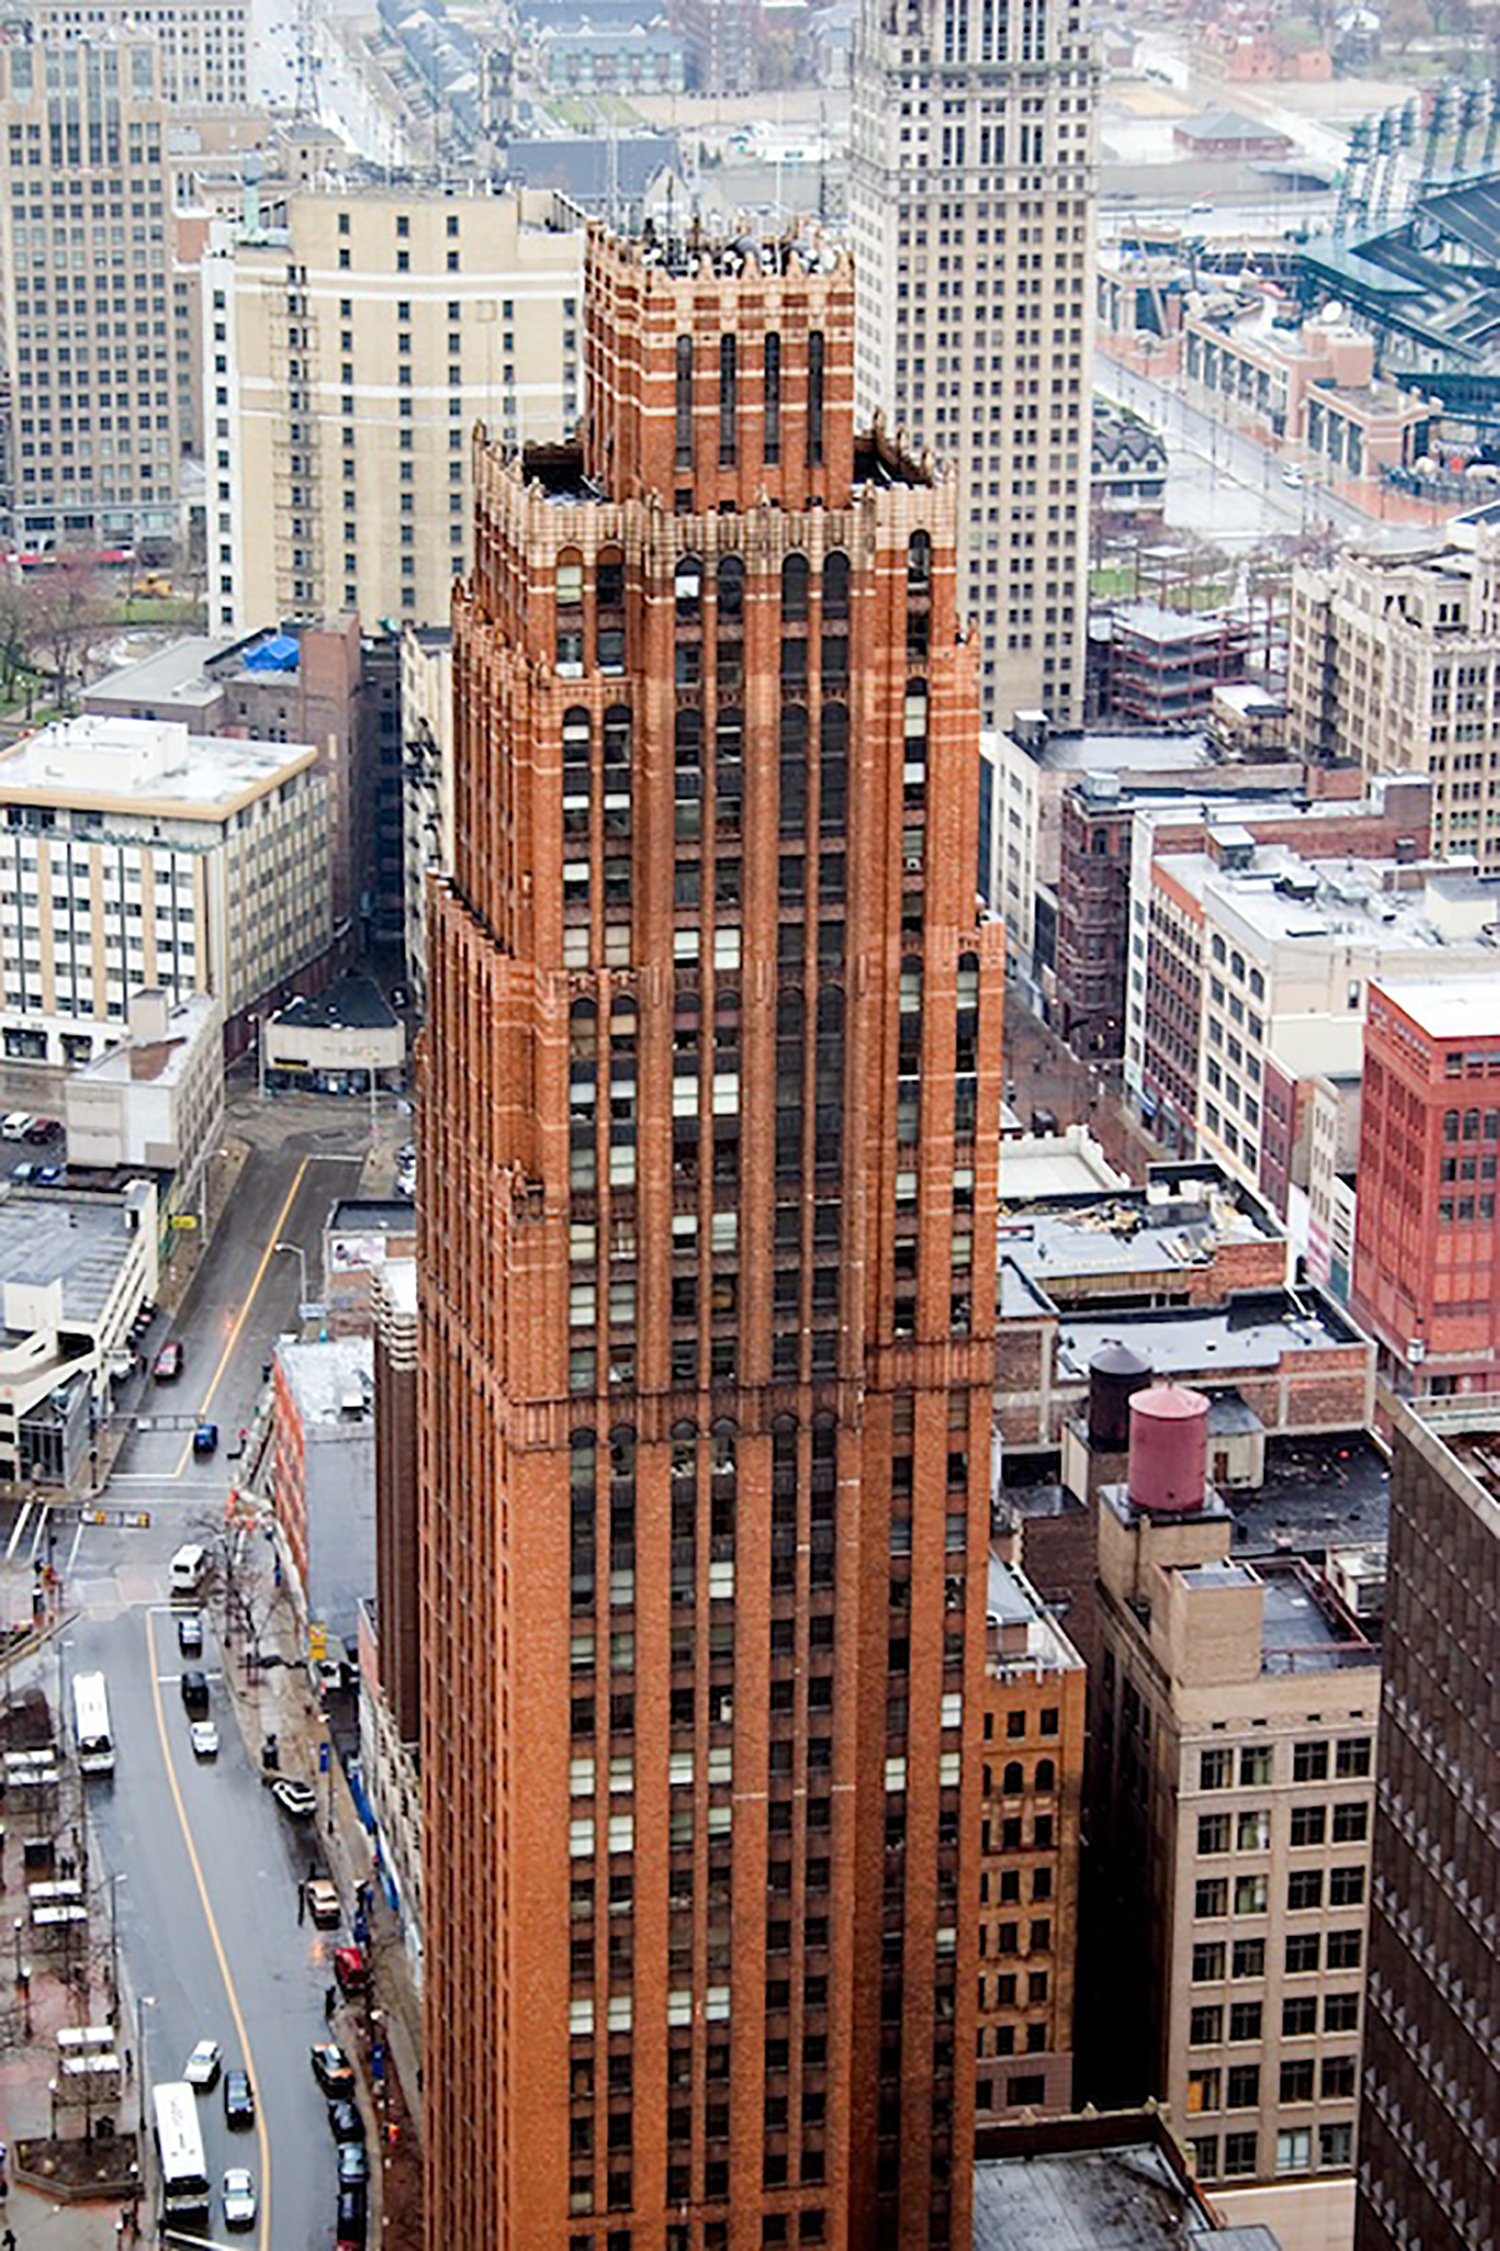 David Stott Building / Donaldson & Meier / 1929